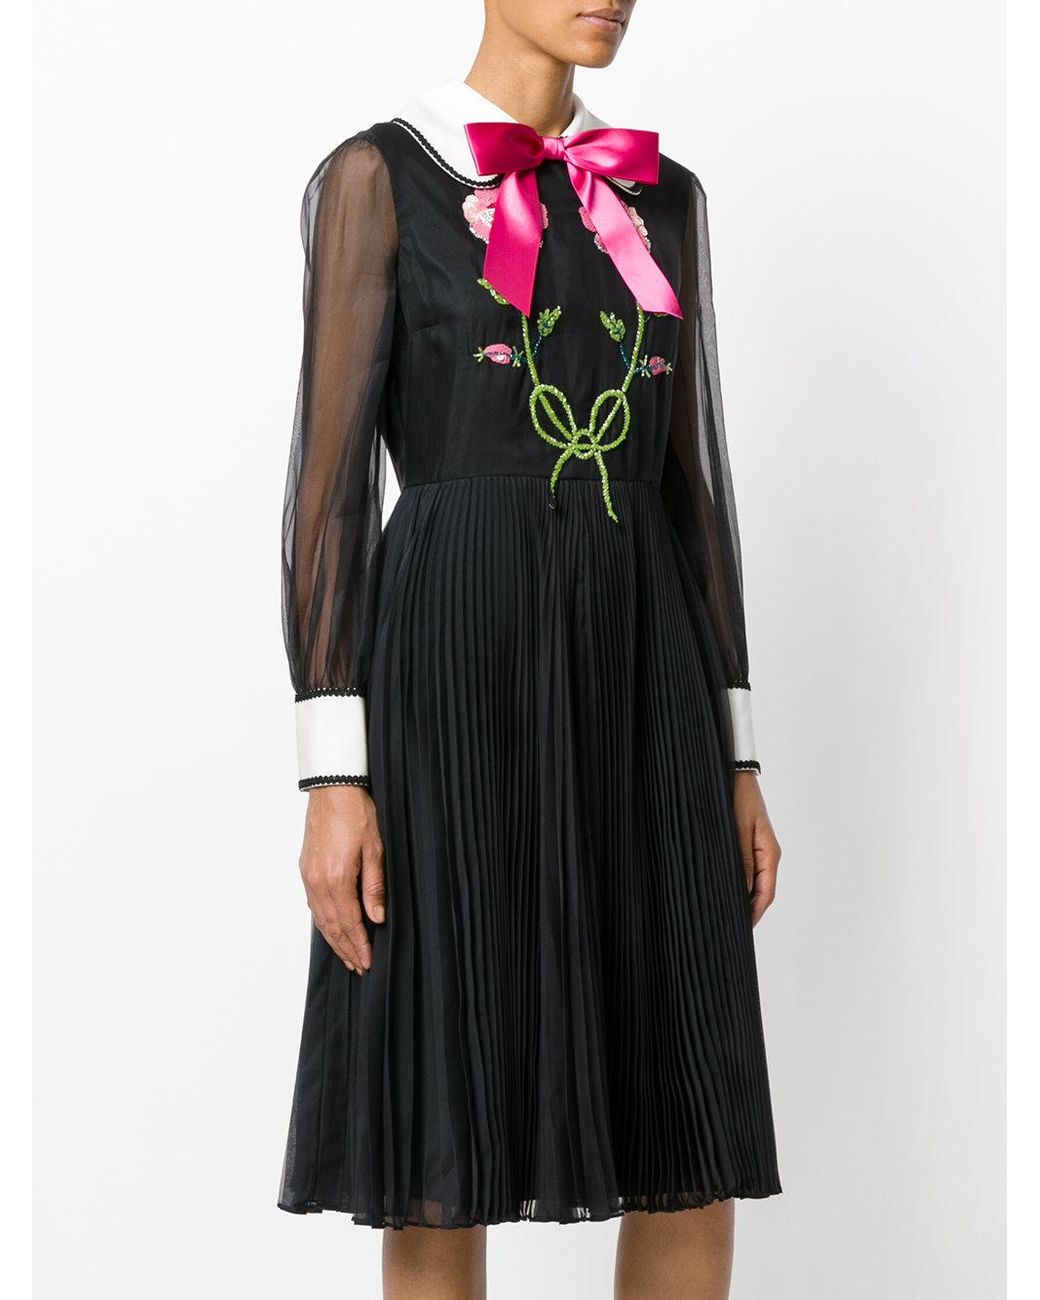 Gucci Bow Tie Dress in Black | Lyst